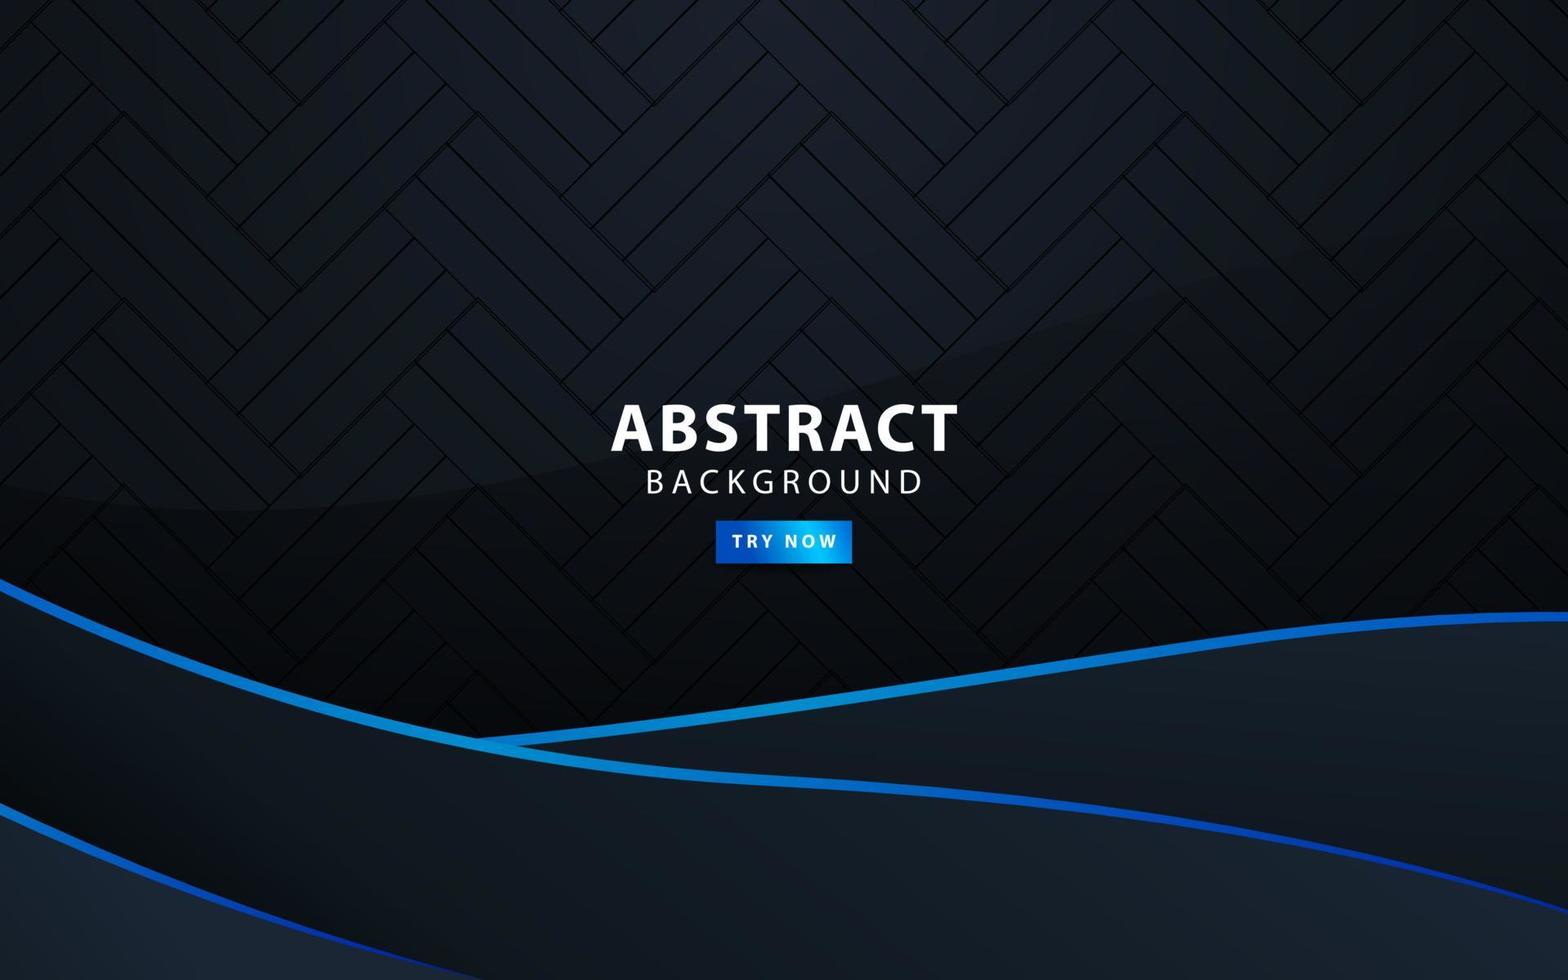 modern premium dark abstract background banner design, with blue line.vector illustration.. vector